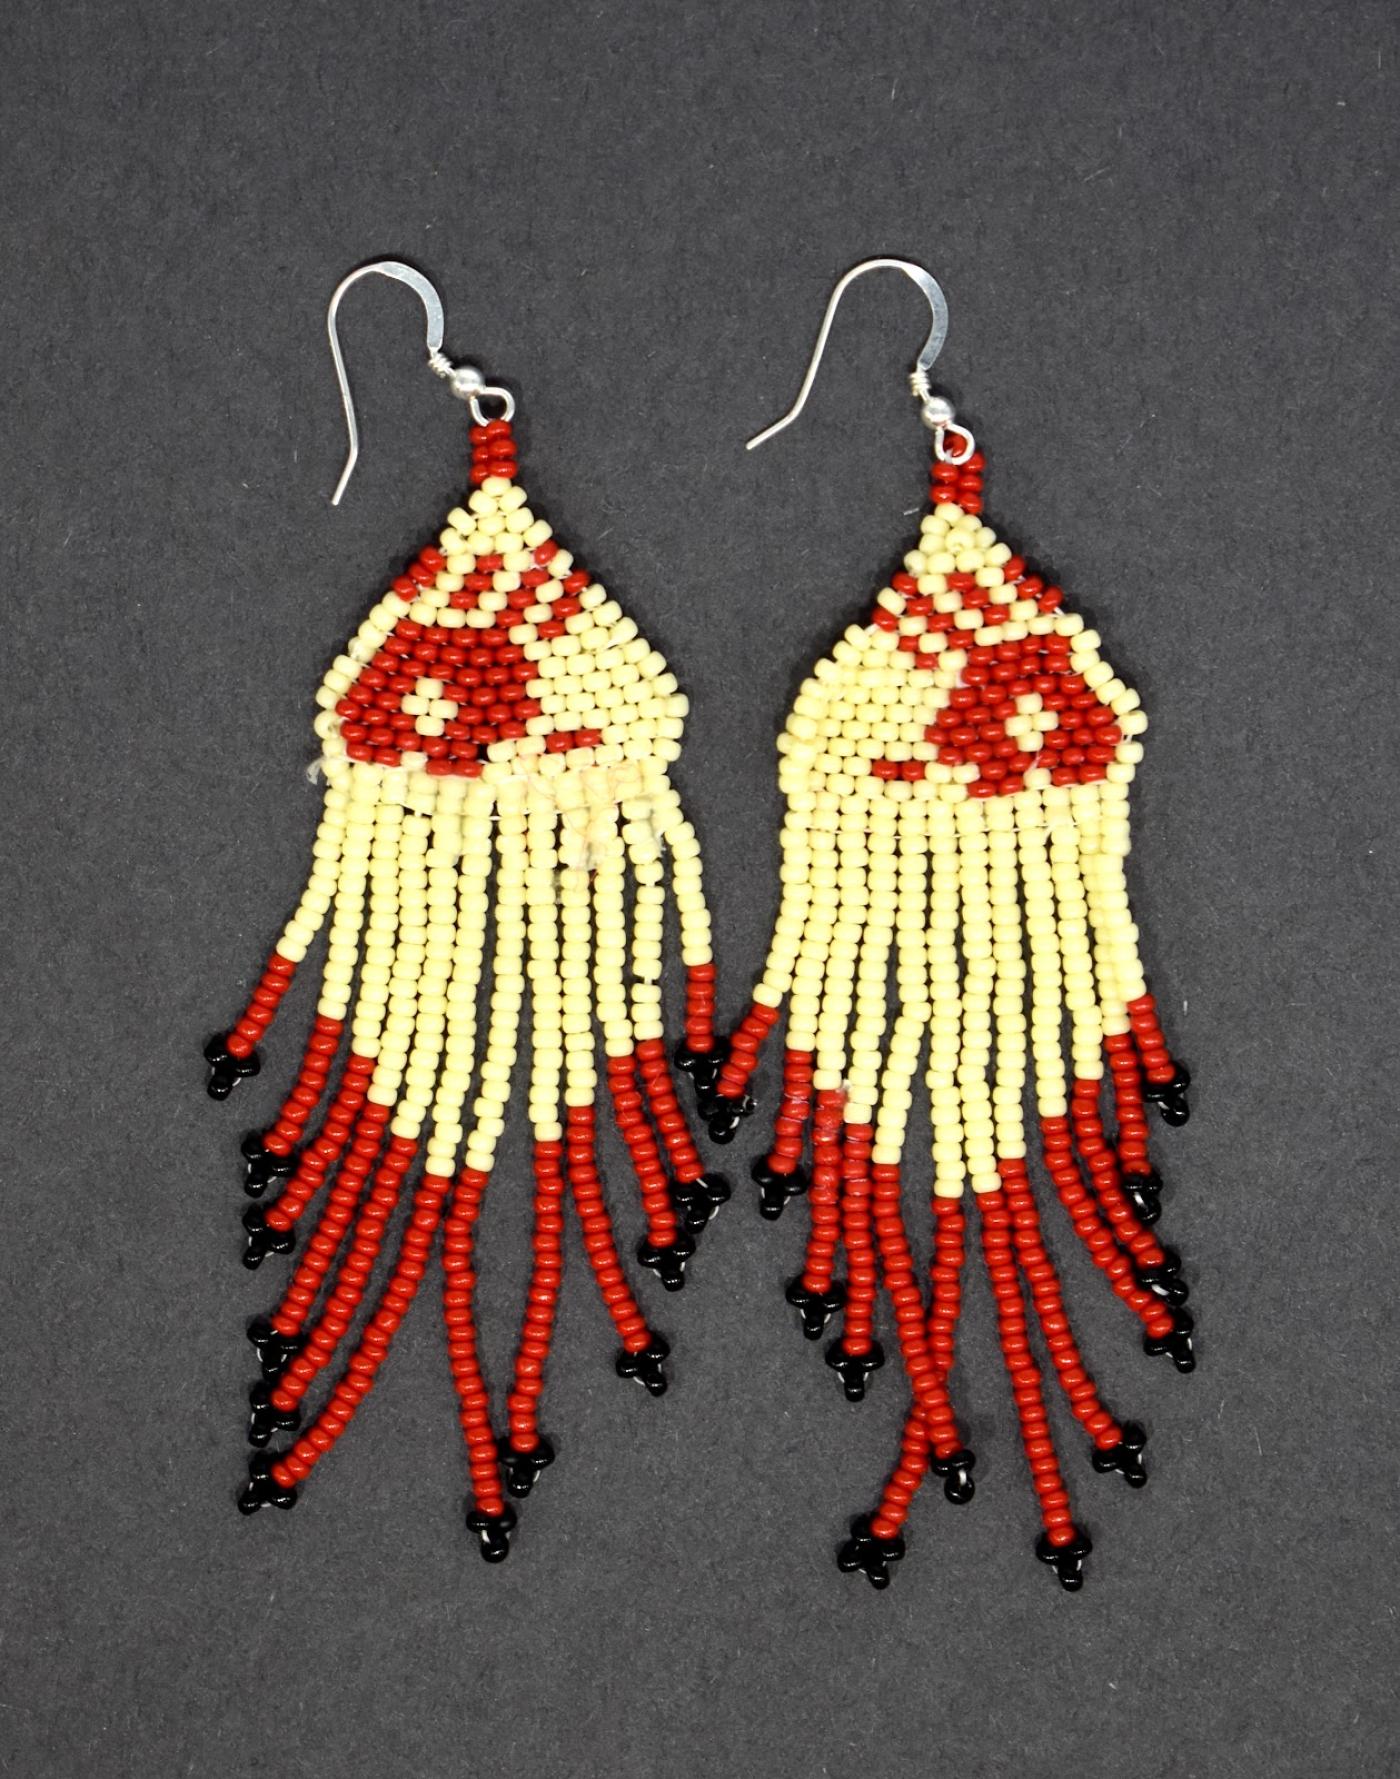 Beadwork earrings with beaded tassels depicting red handprints. 